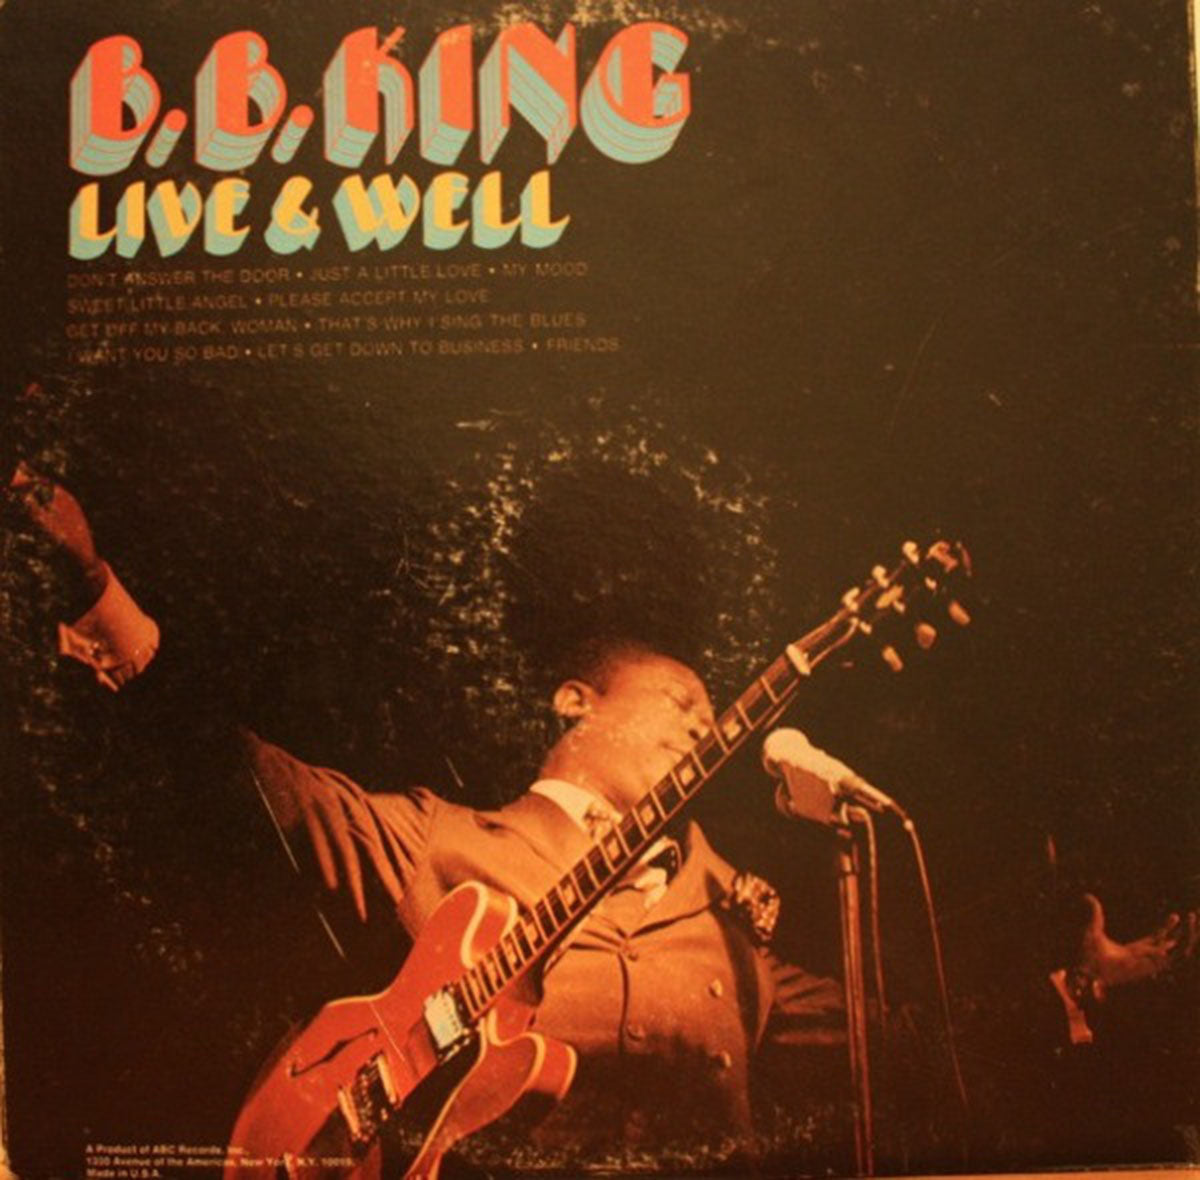 B.B. King – Live & Well - US Pressing